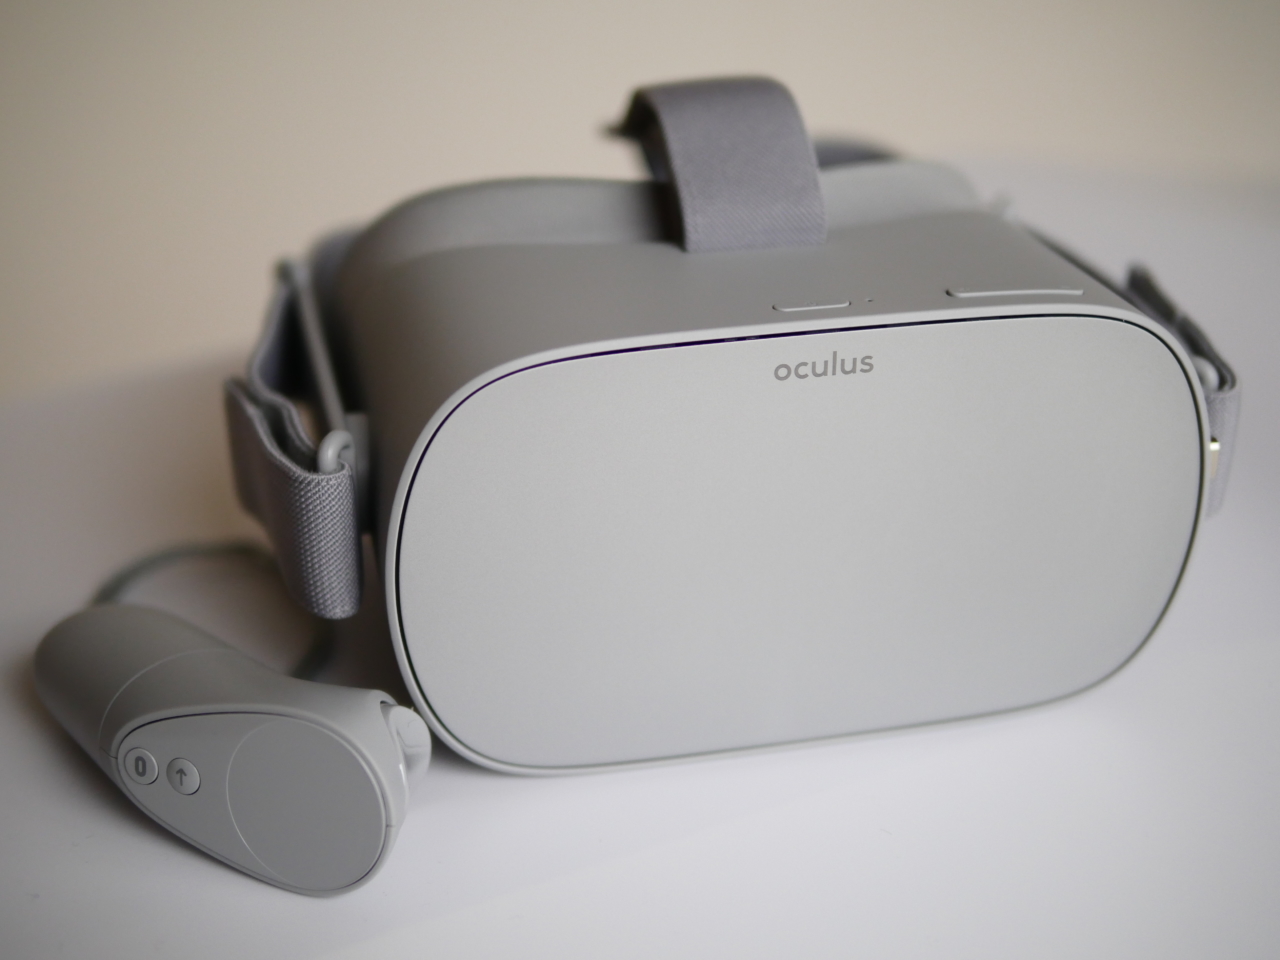 Oculusシリーズ、どれを買えば良い？ 選択チャート 2020年1月版 Oculus Rift S、Quest、Go | 着物オヤジ